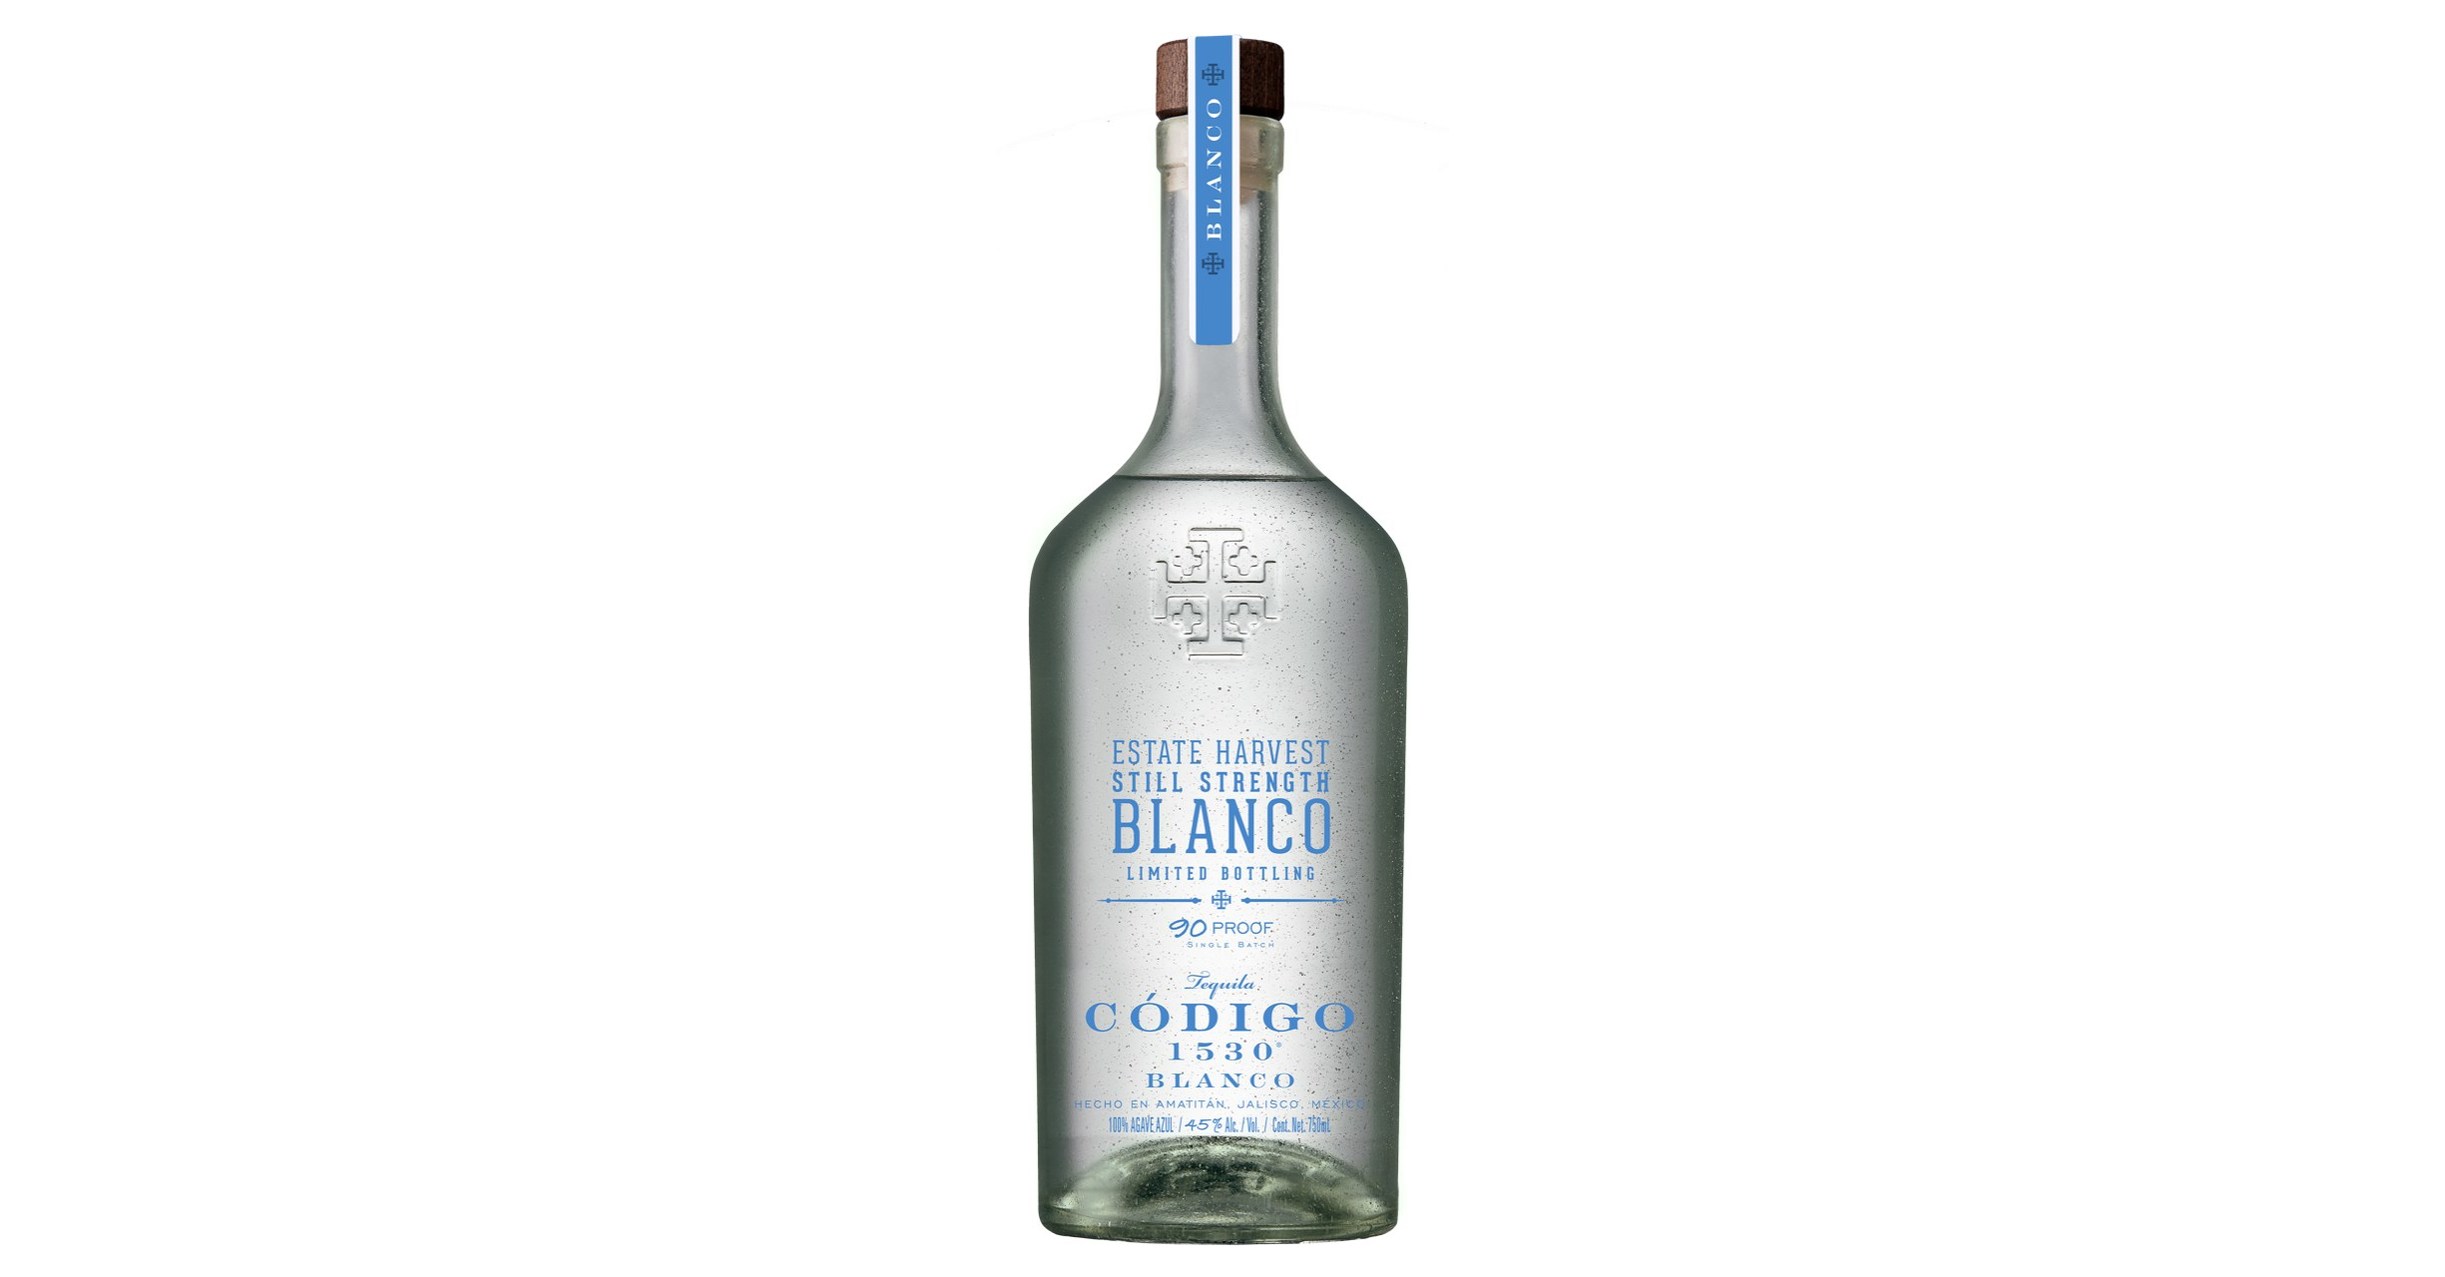 Código 1530 to Release First Estate Harvest Still Strength Blanco Tequila